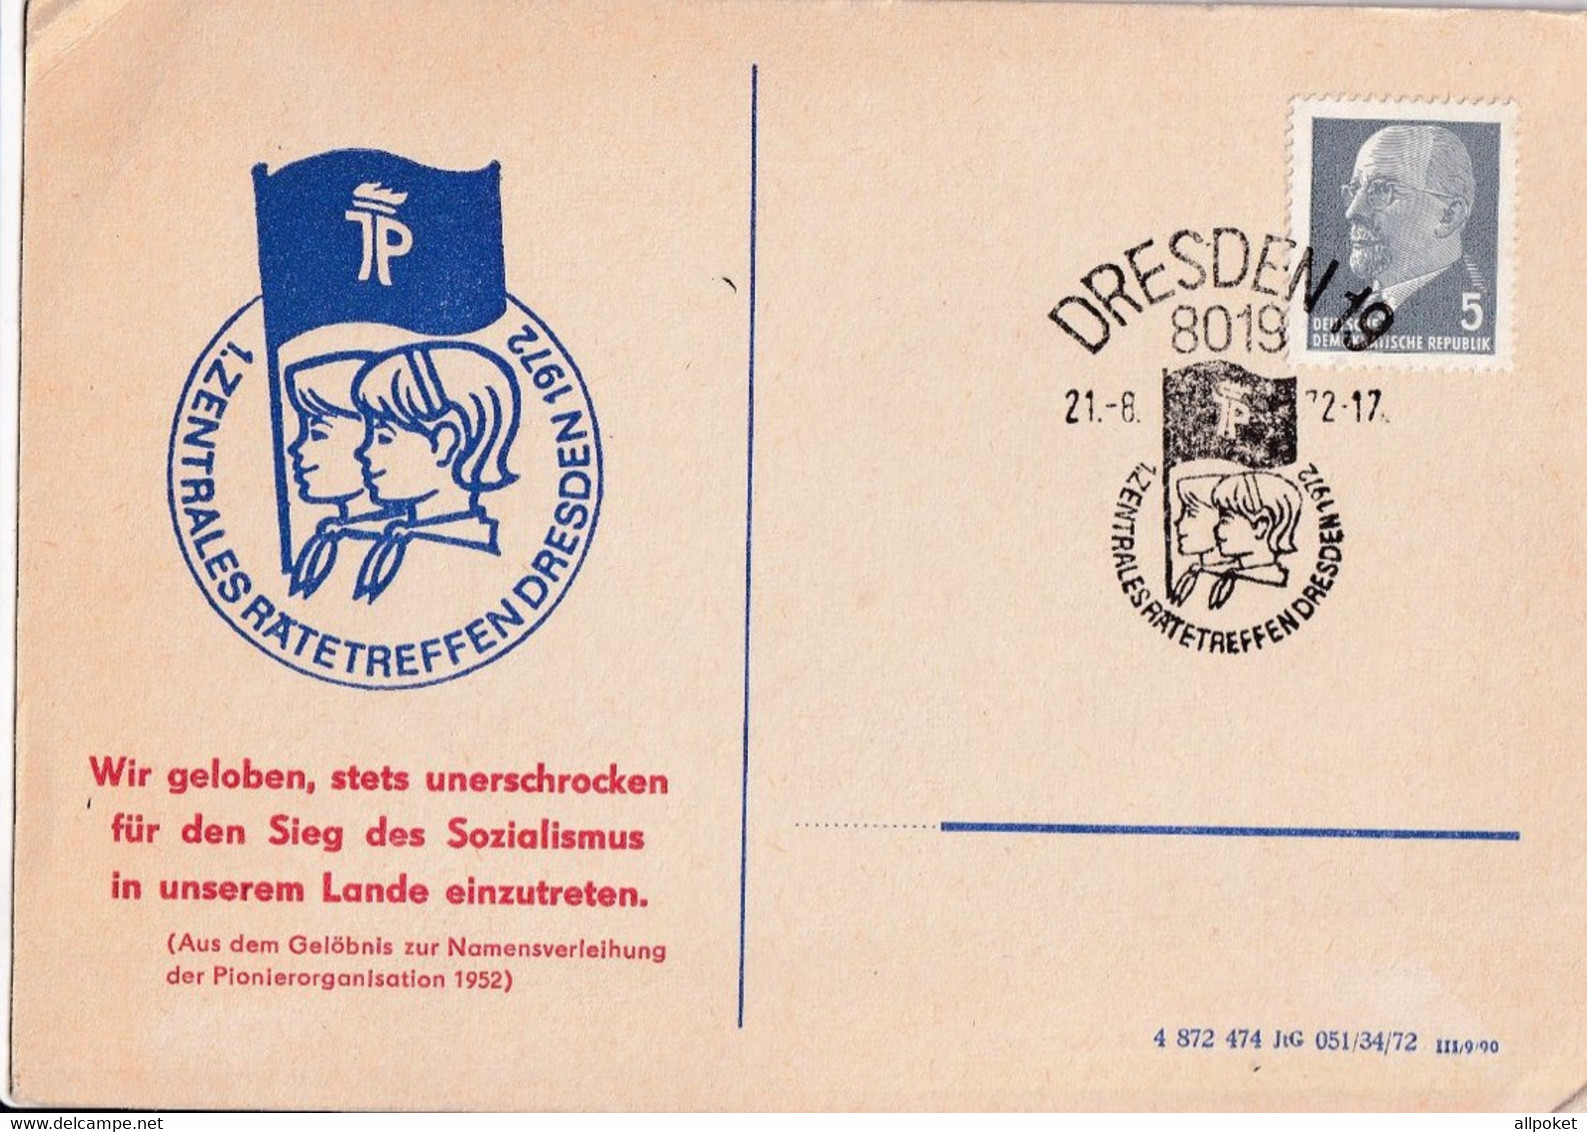 A14402 - ZENTRALES RATTETREFFEND DRESDEN IP SCOUTS DRESDEN GERMANY 1972 - Cartes Postales Privées - Oblitérées